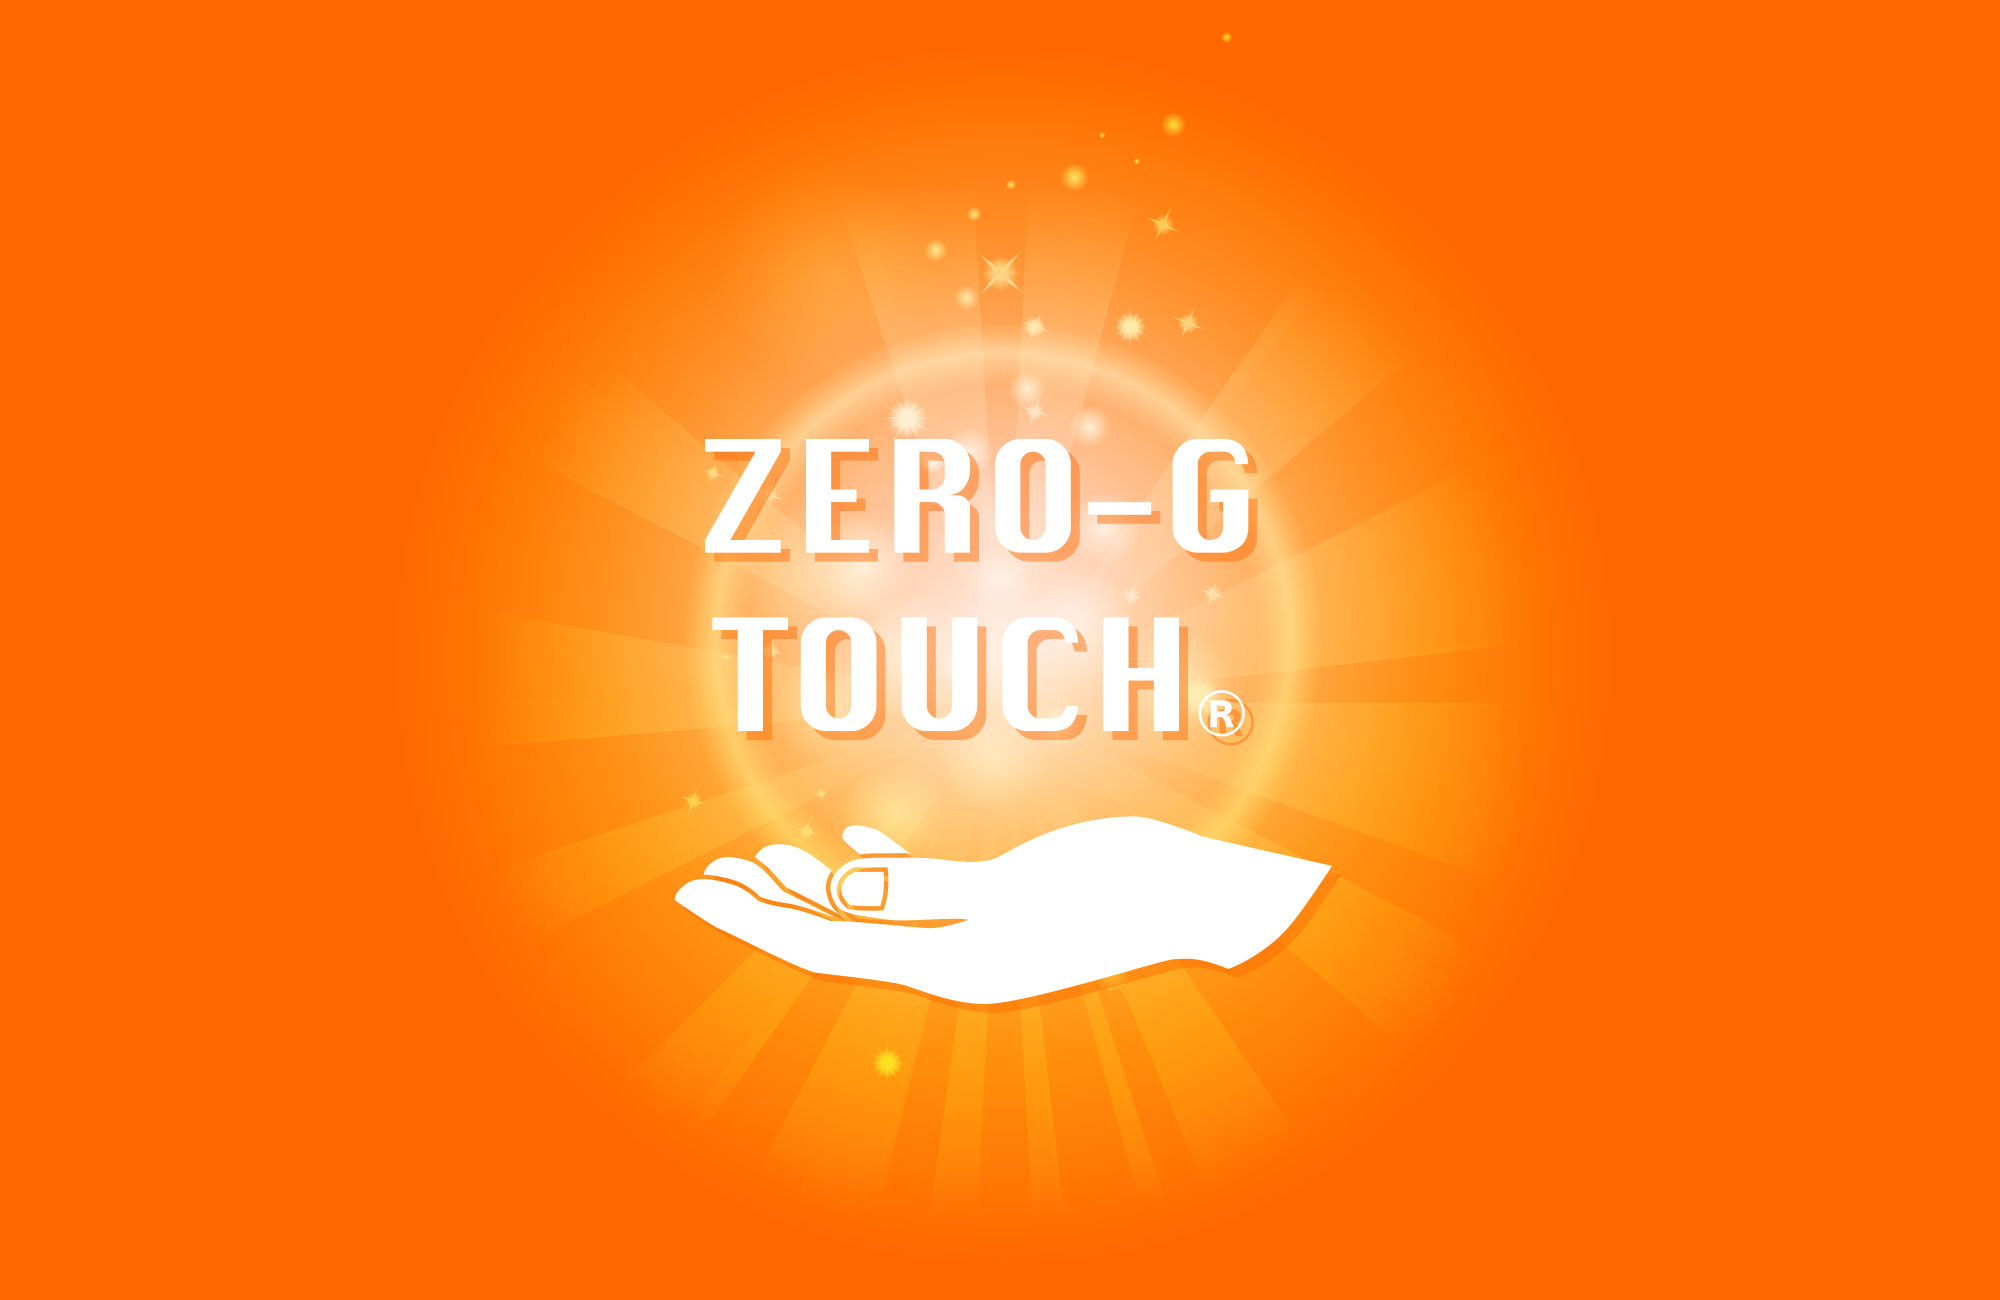 ZERO-G TOUCH®の動画 | 国際ZERO-G TOUCH協会